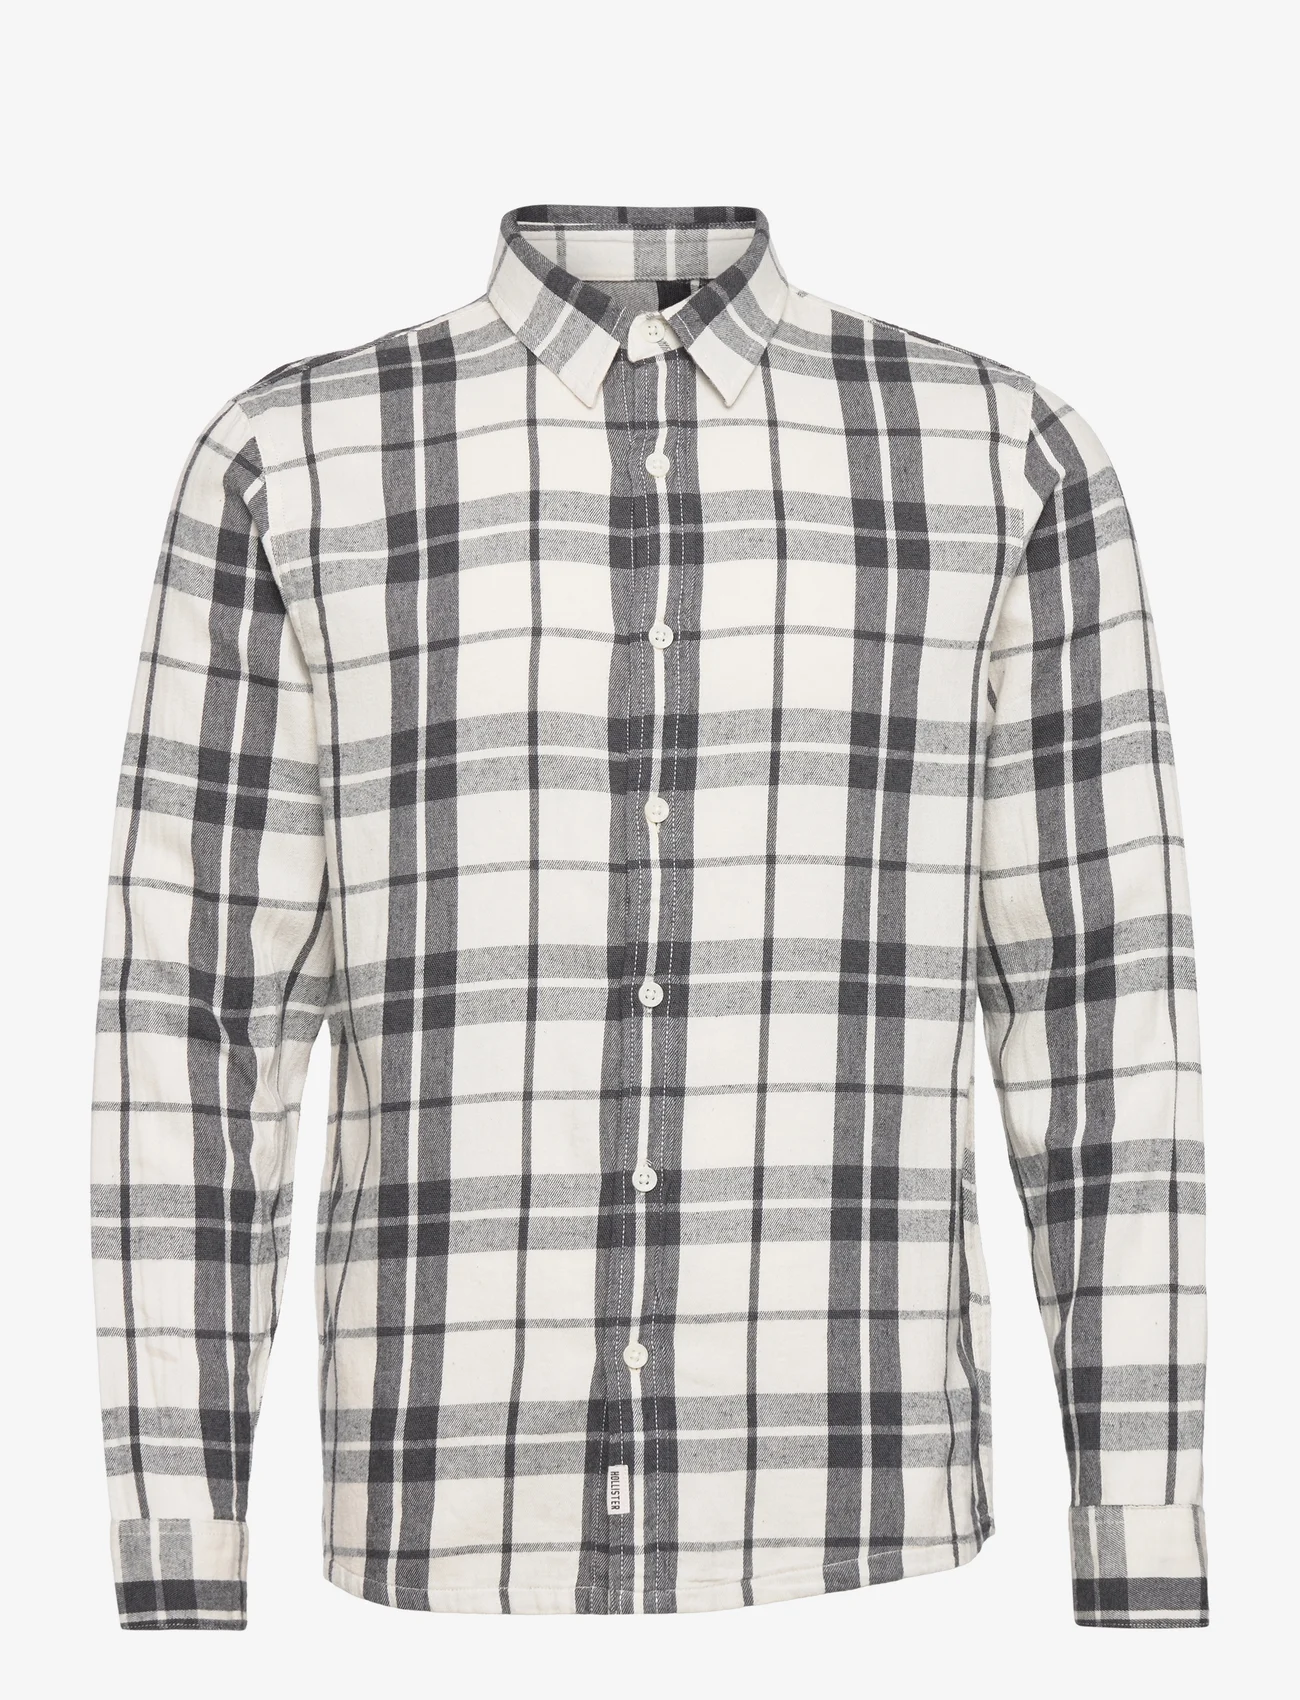 Hollister - HCo. GUYS WOVENS - checkered shirts - white plaid - 0